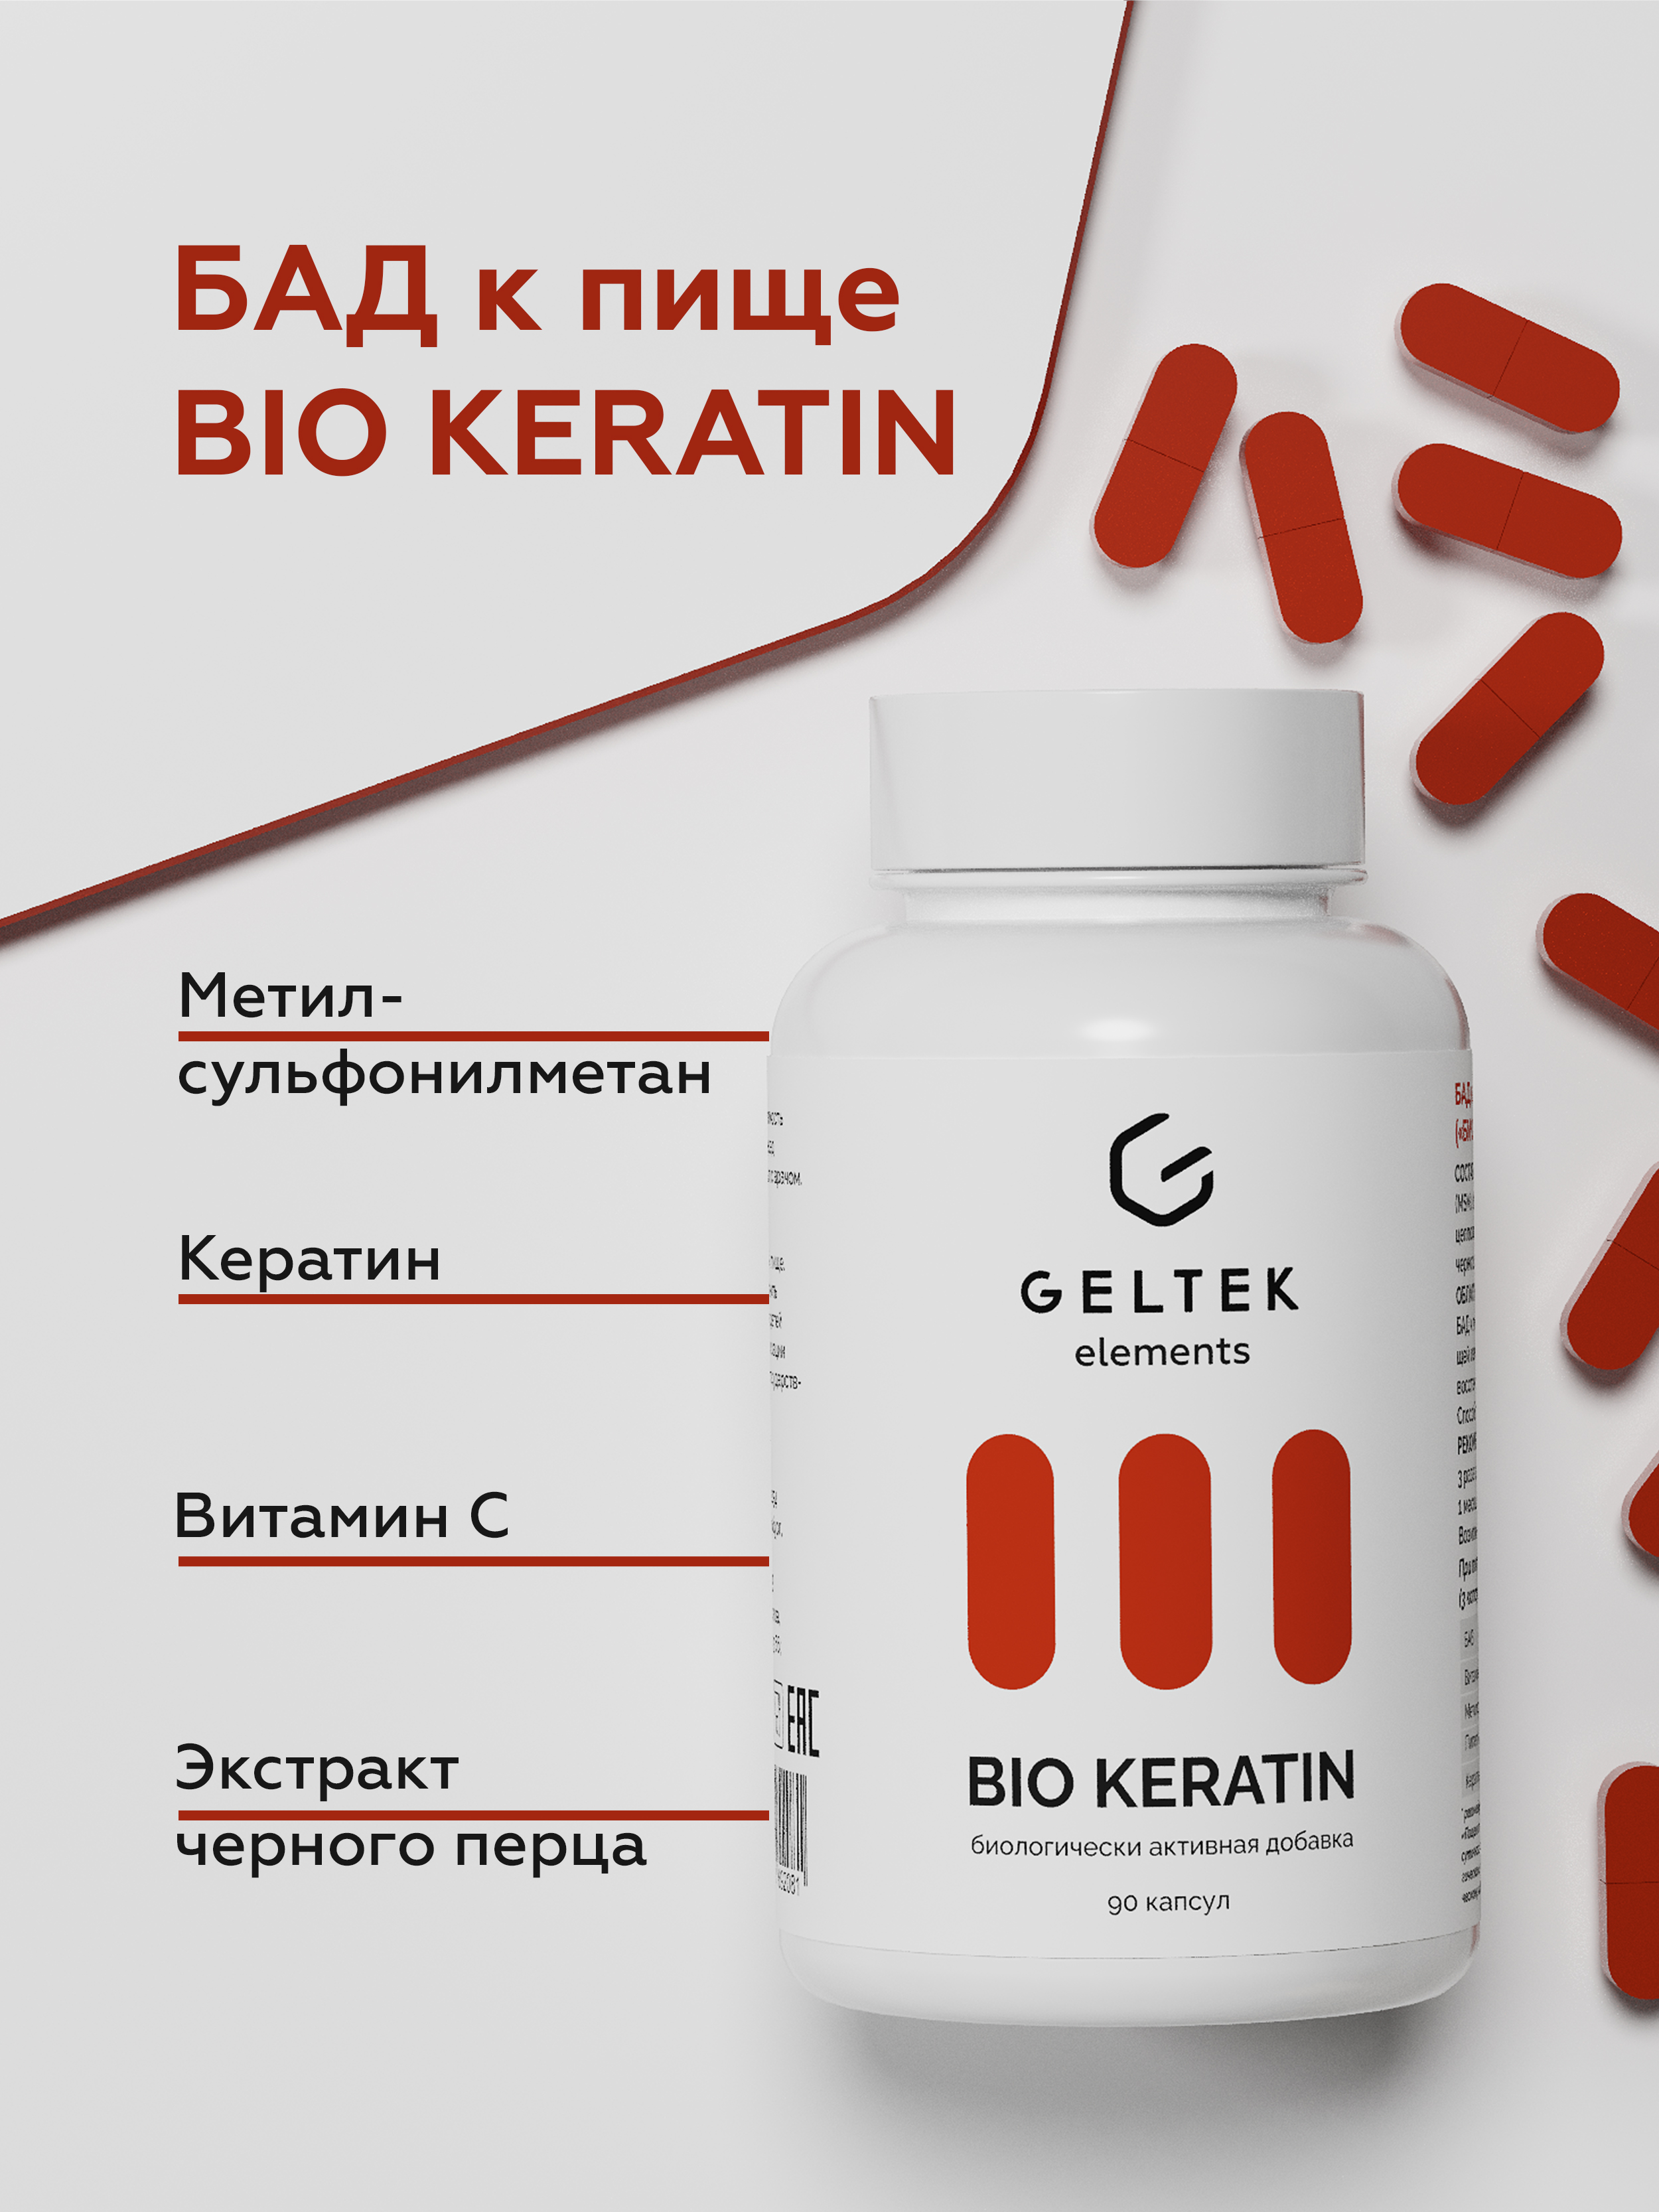 Food supplement BIO KERATIN